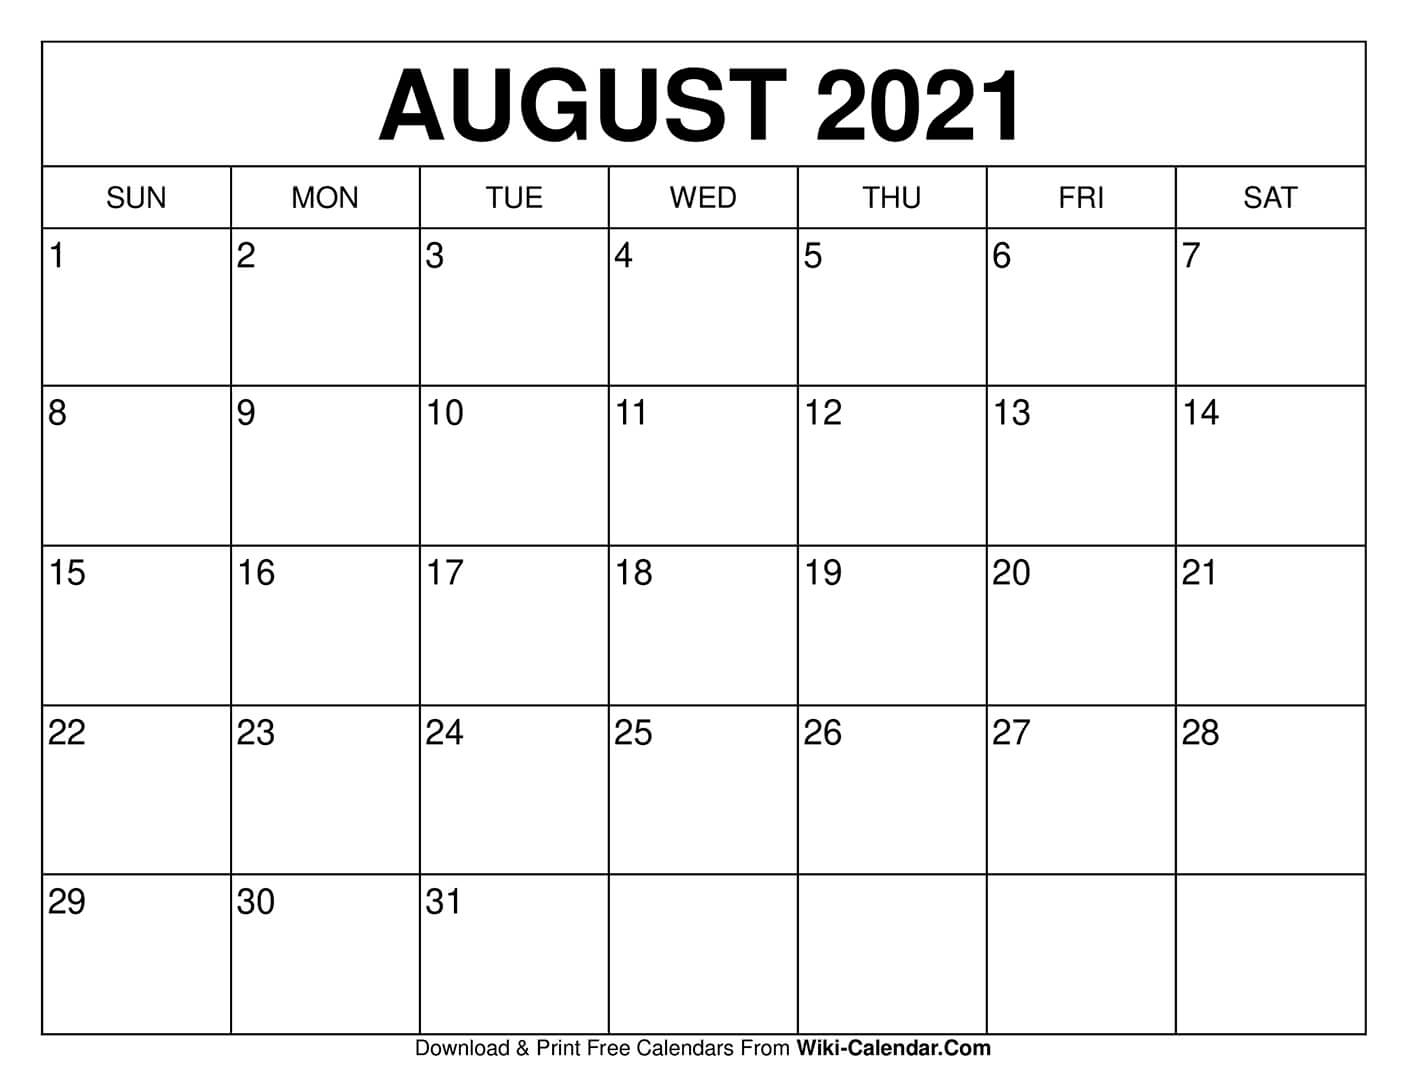 Free Printable August 2021 Calendars Free Calendar Template August 2021